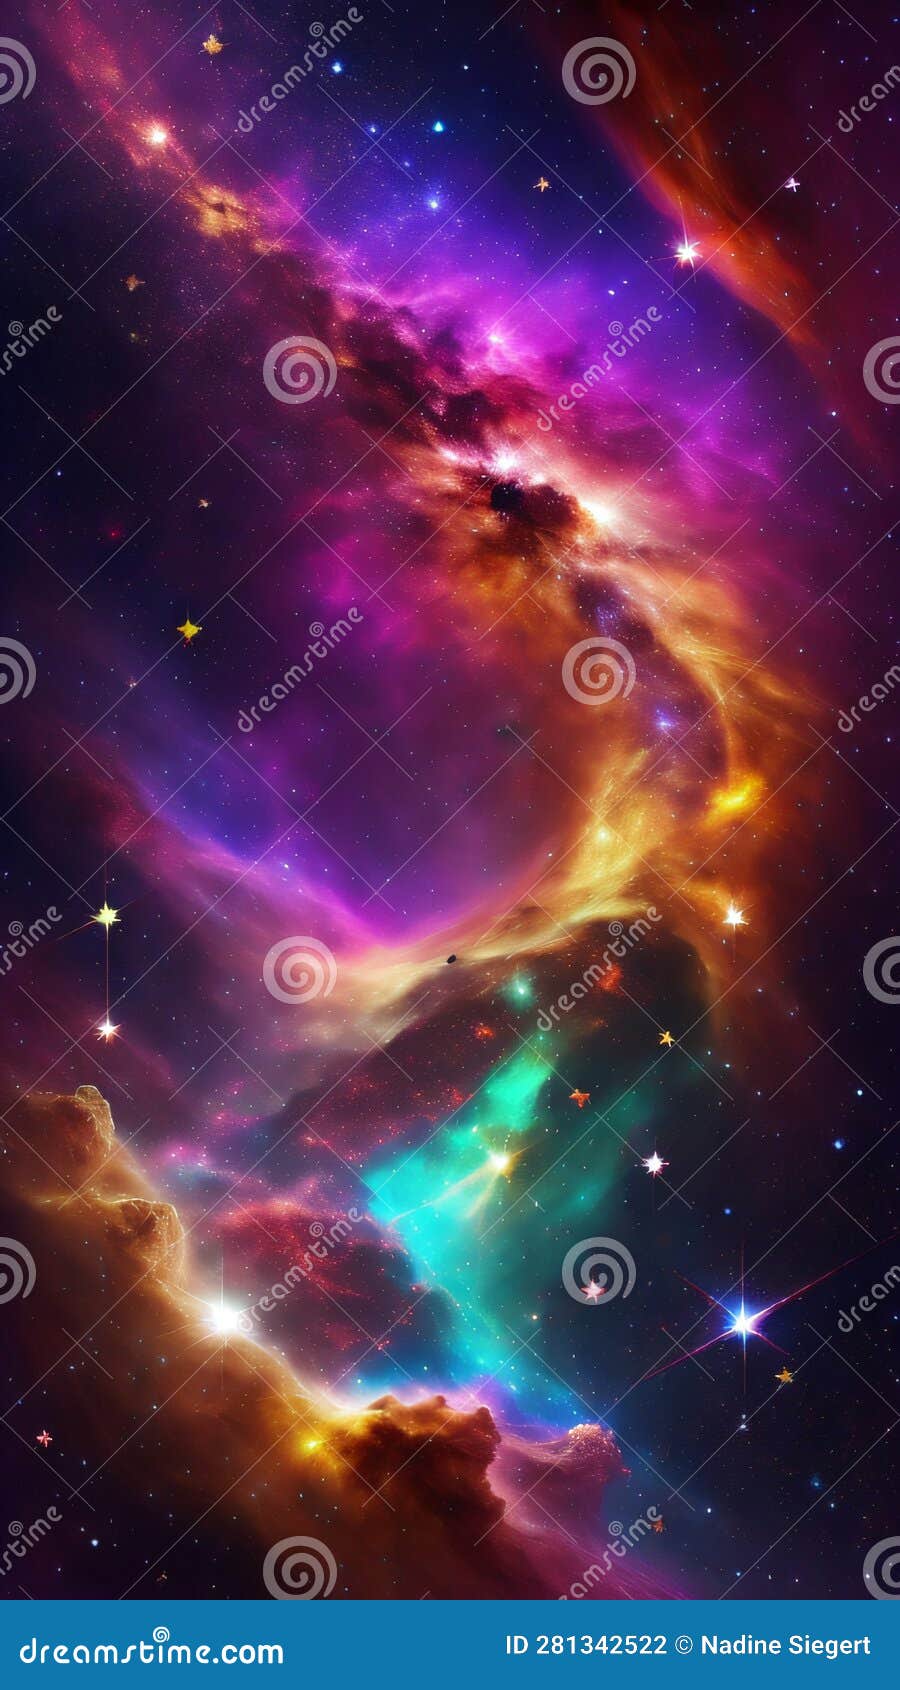 Galaxy Space Wallpaper 8K